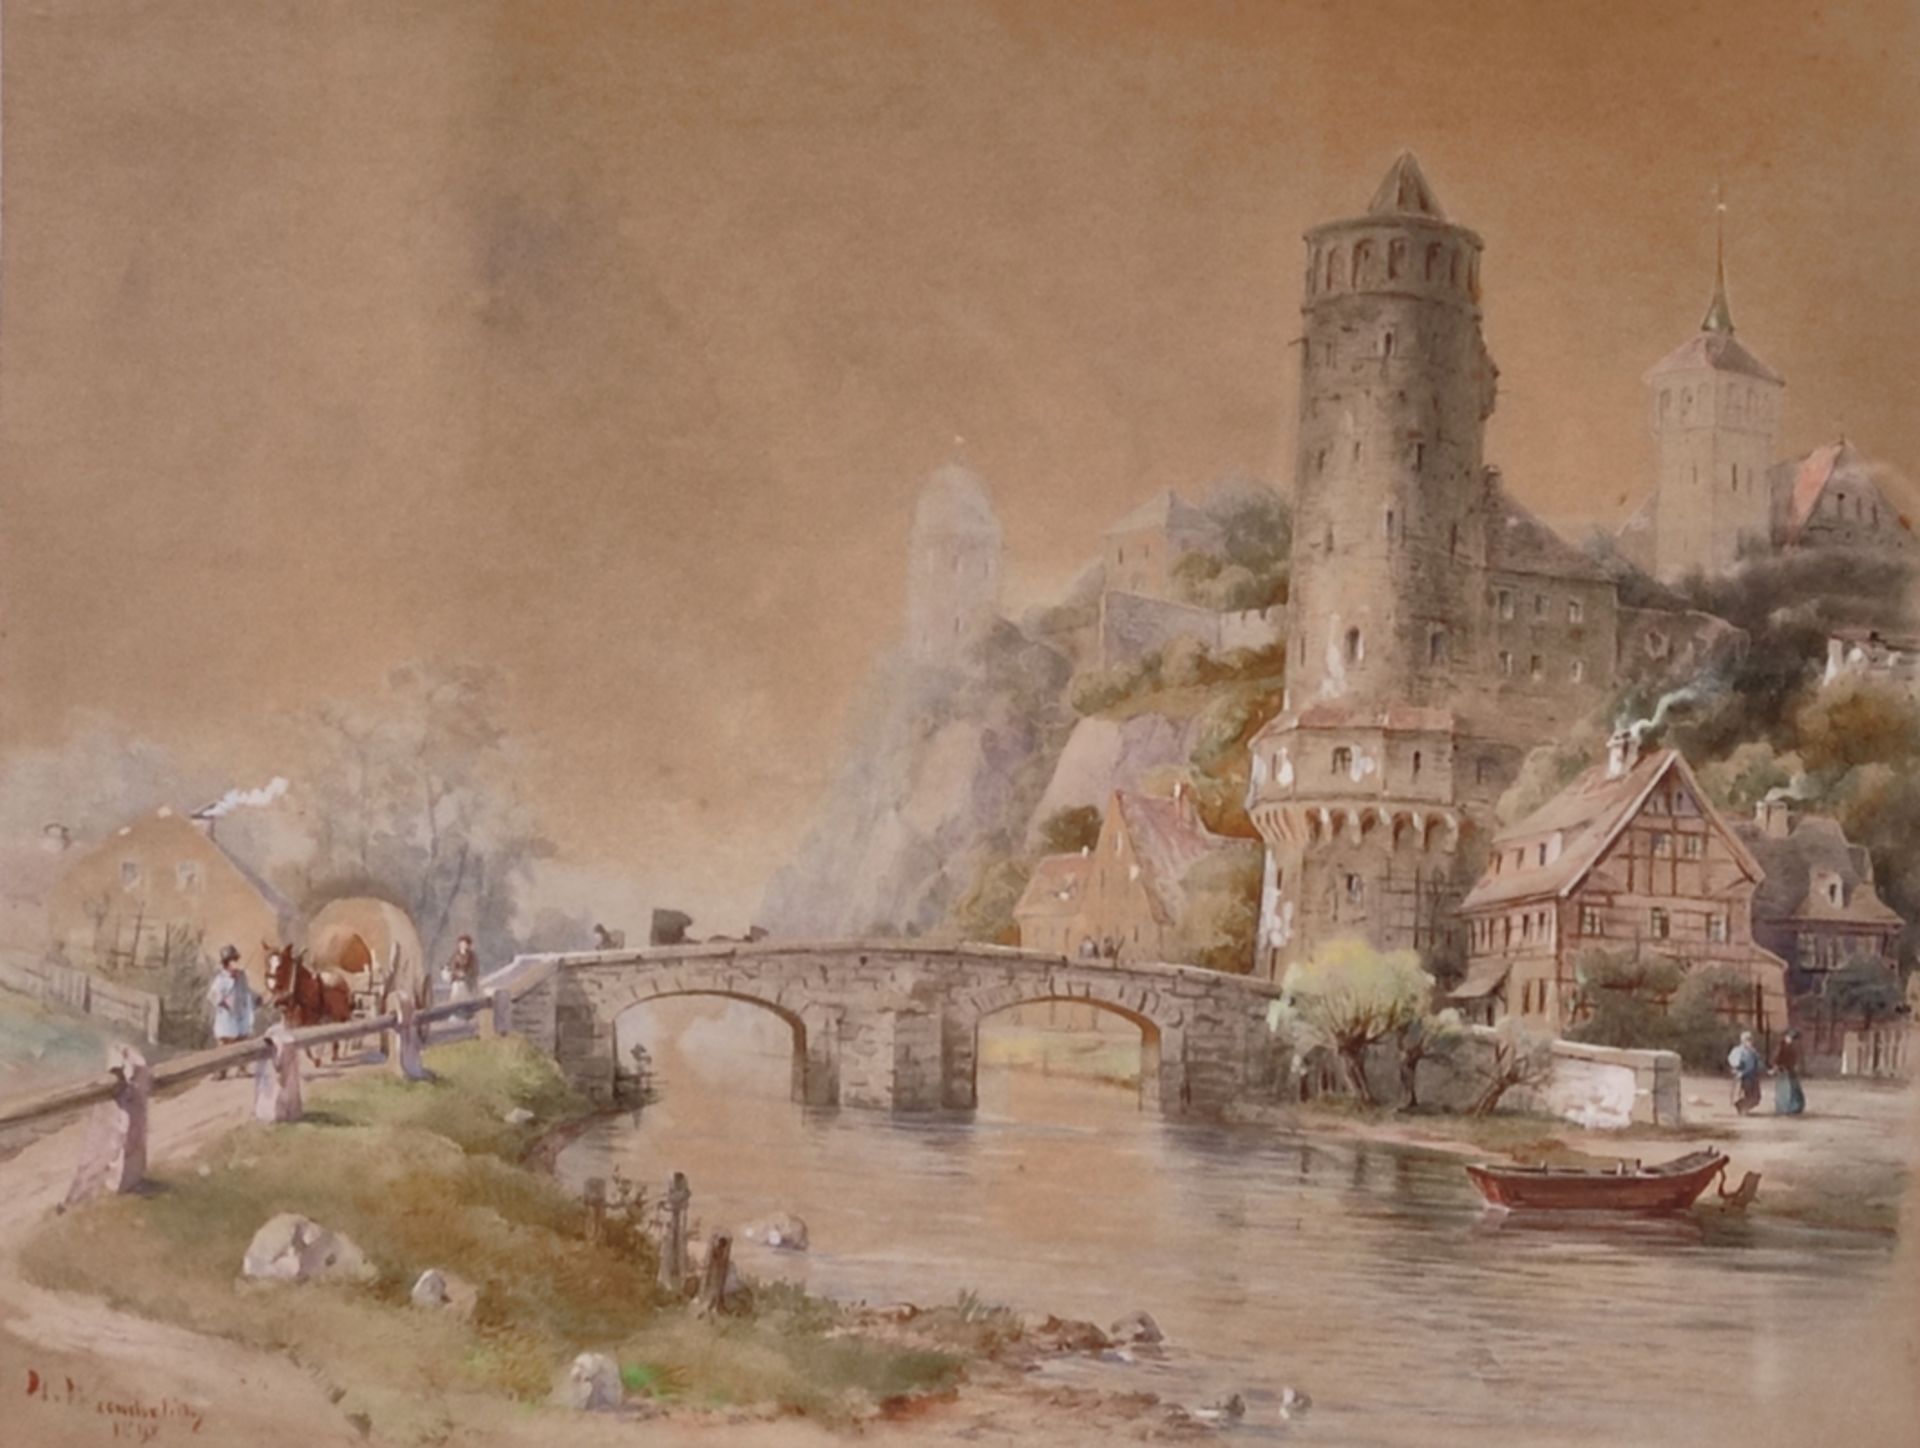 Watercolorist (19th century) "Bautzen", view of the castle and bridge, watercolor on paper, signed 